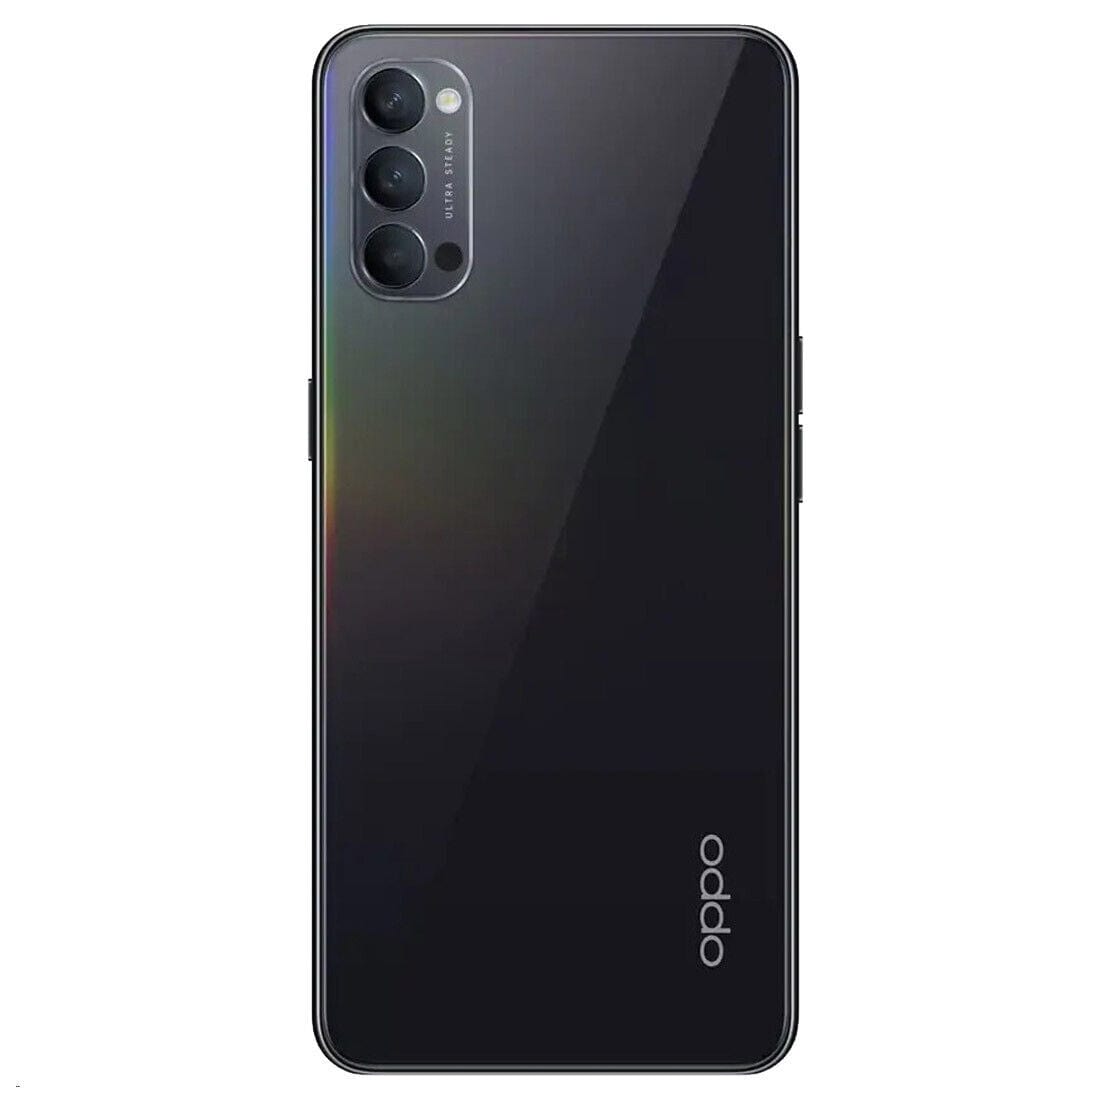 OPPO Reno 4 5G mobile phone (Dual Sim, 6.43", 48MP, 128GB/8GB) - Space Black